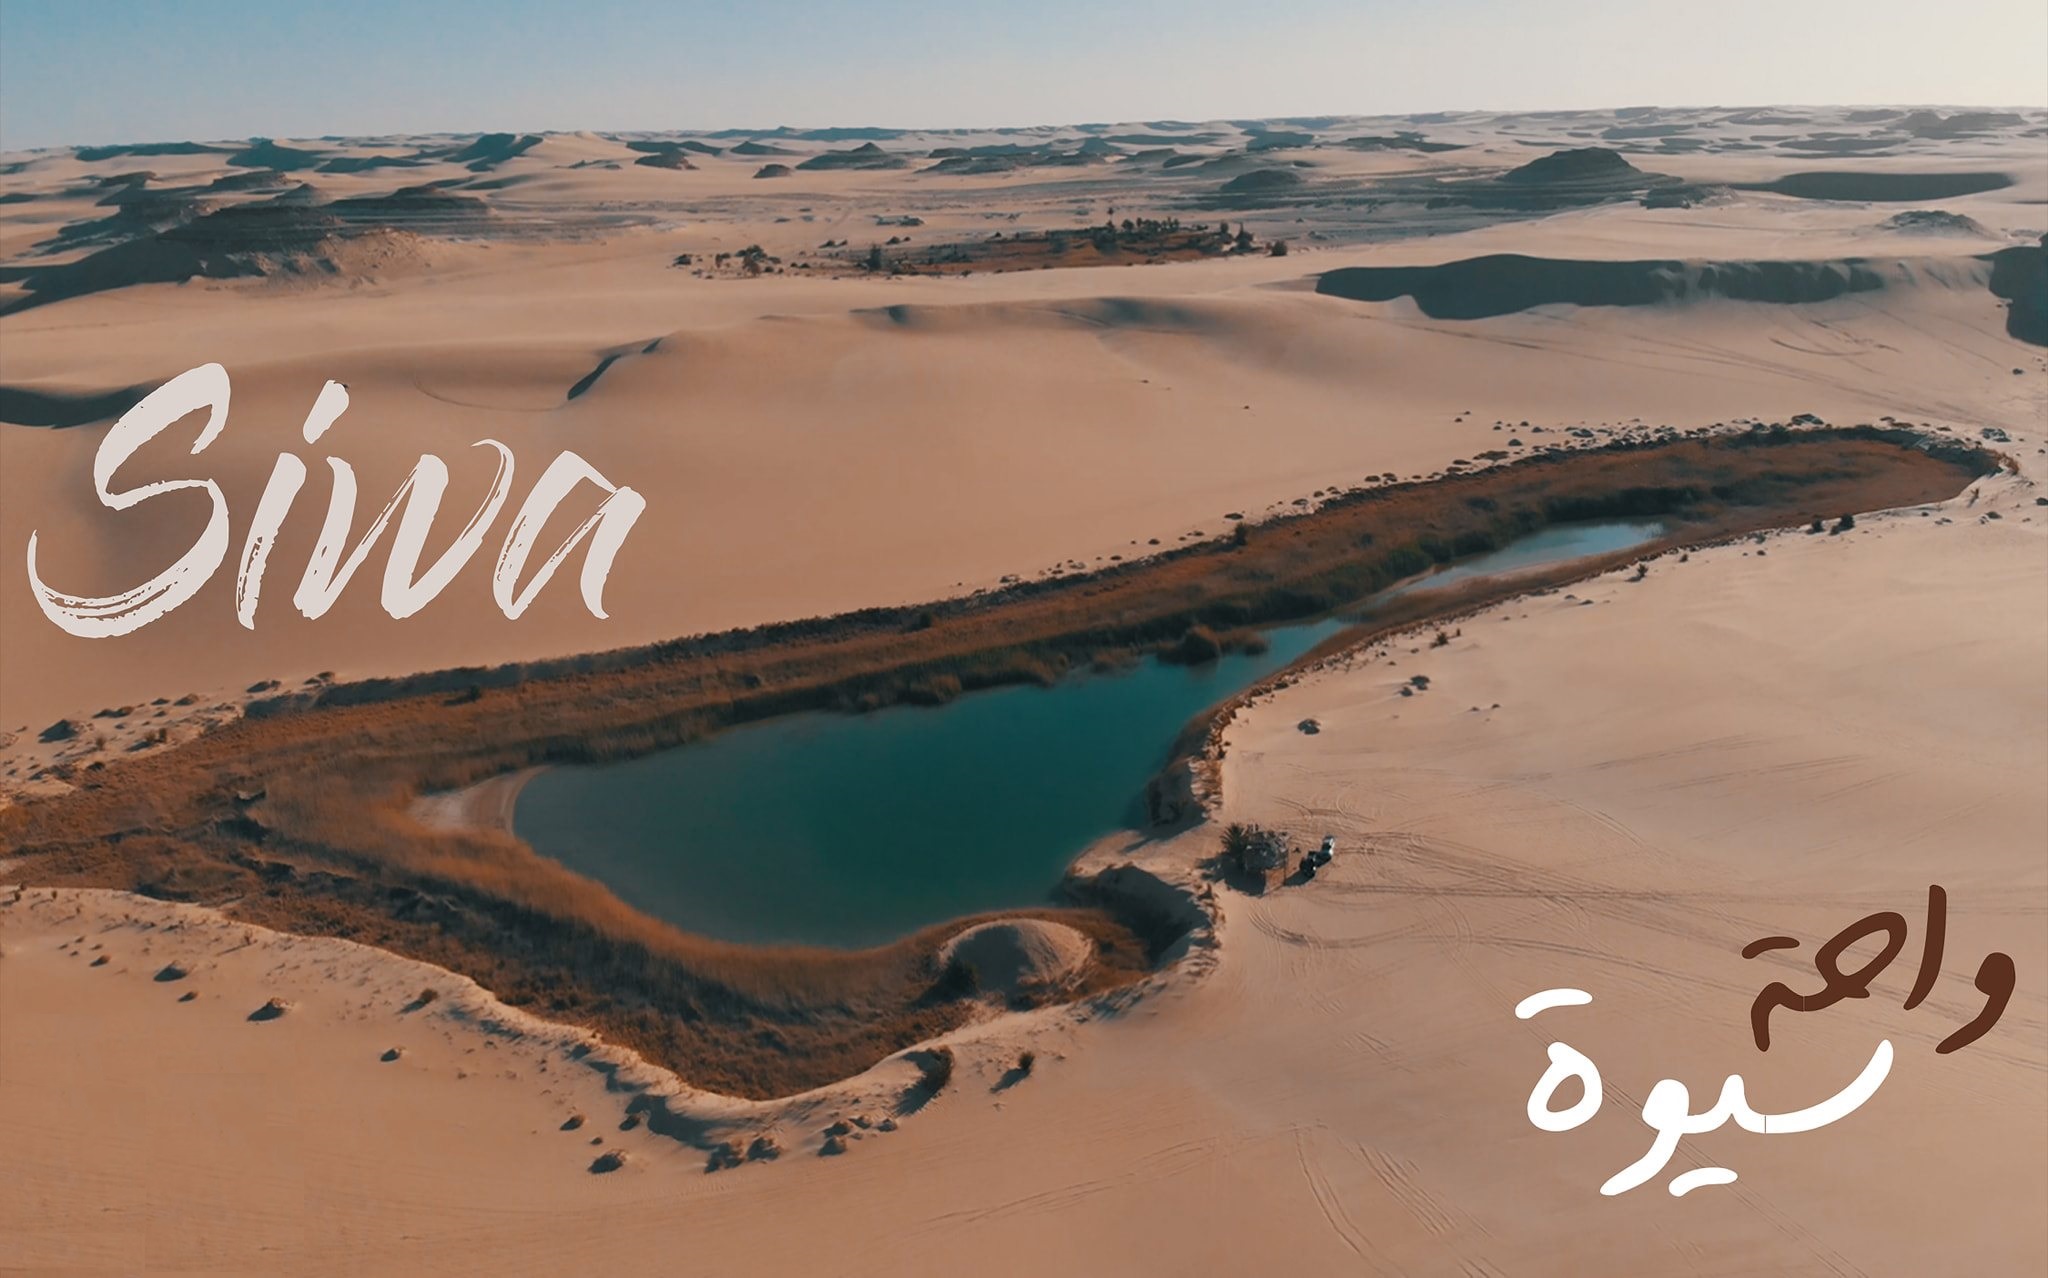 Siwa: An oasis in the Sahara